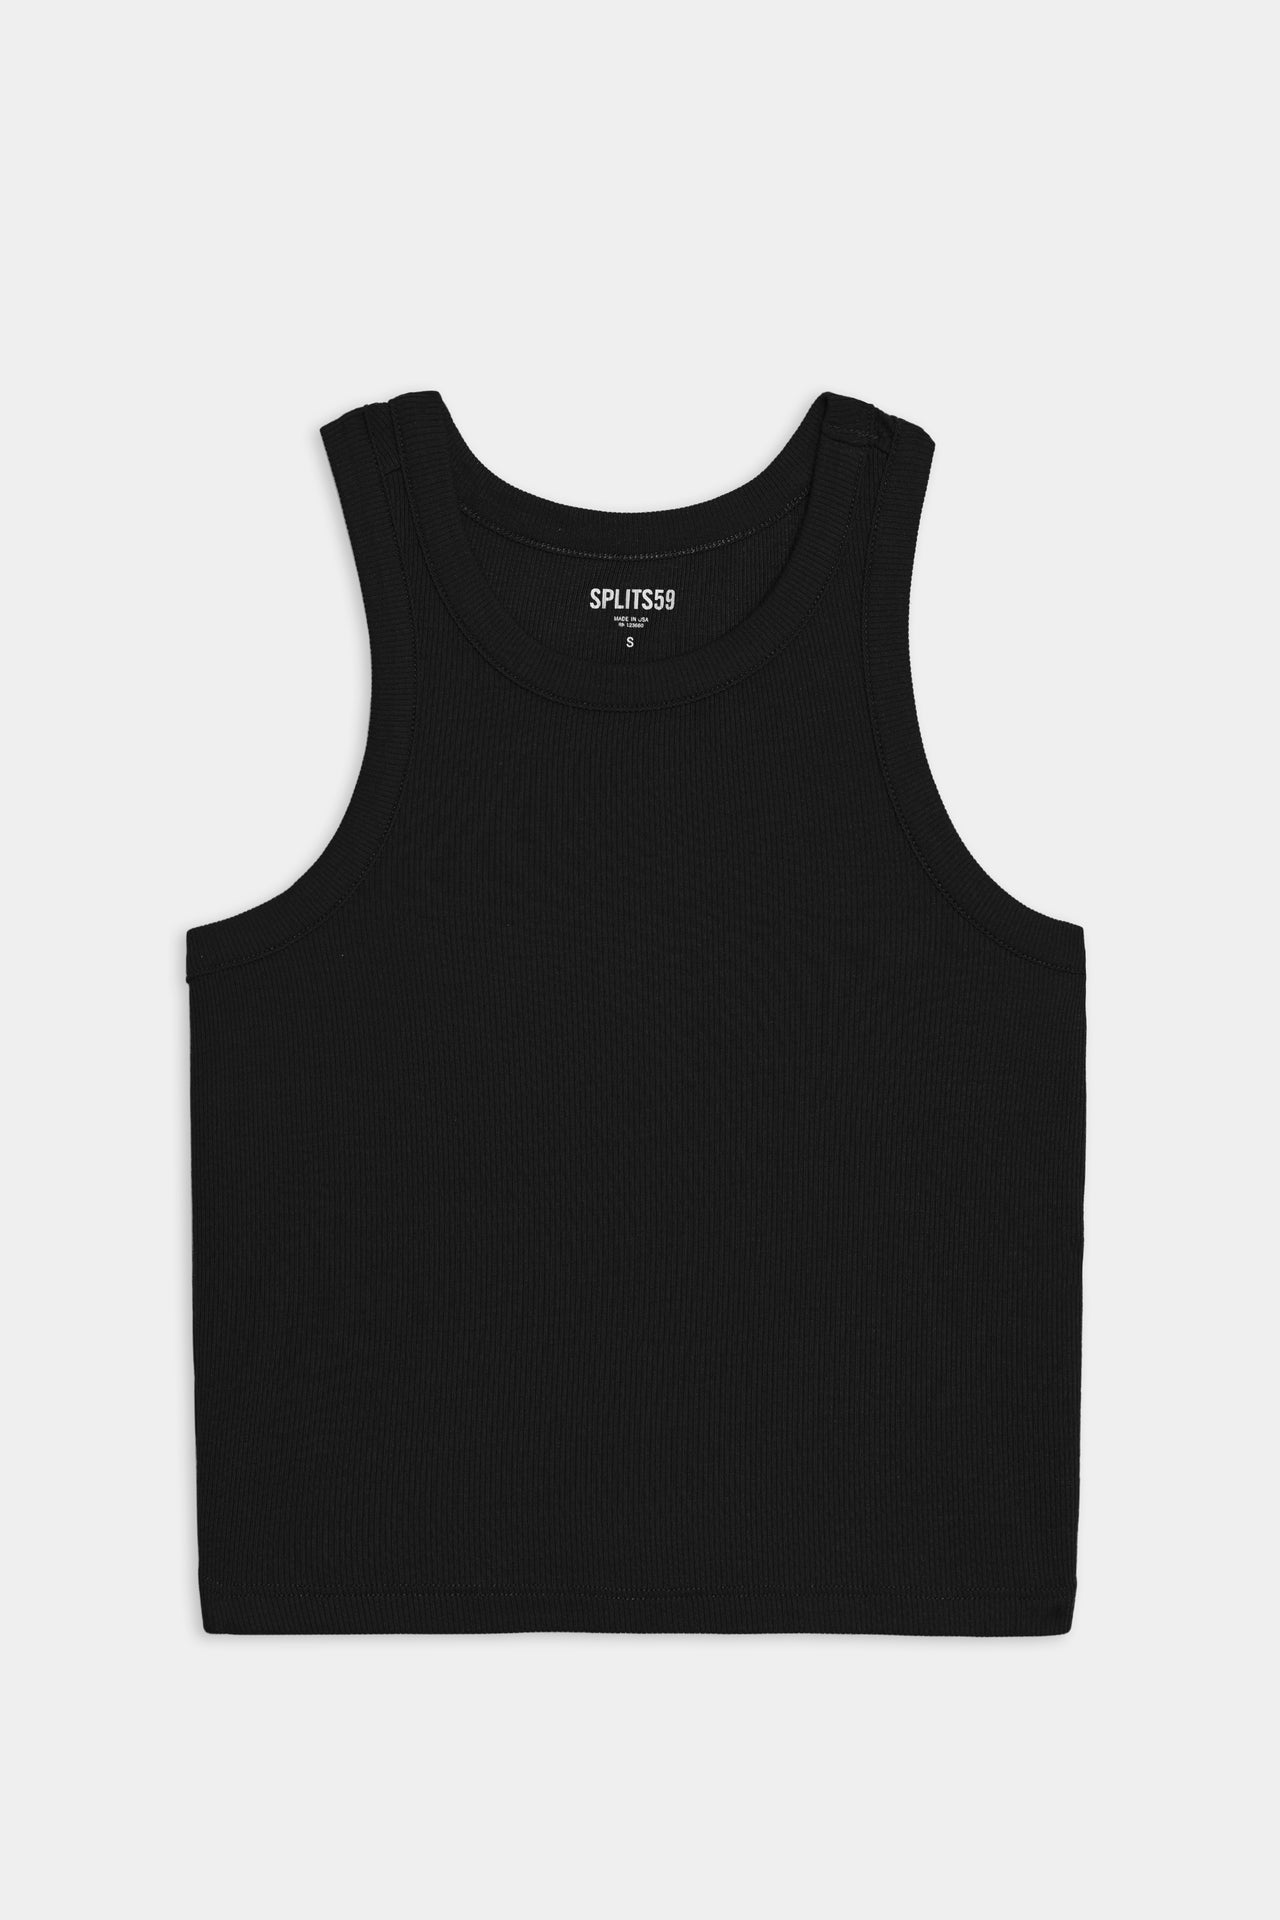 A SPLITS59 Kiki Rib Crop Tank in black on a white background, perfect for gym workouts.